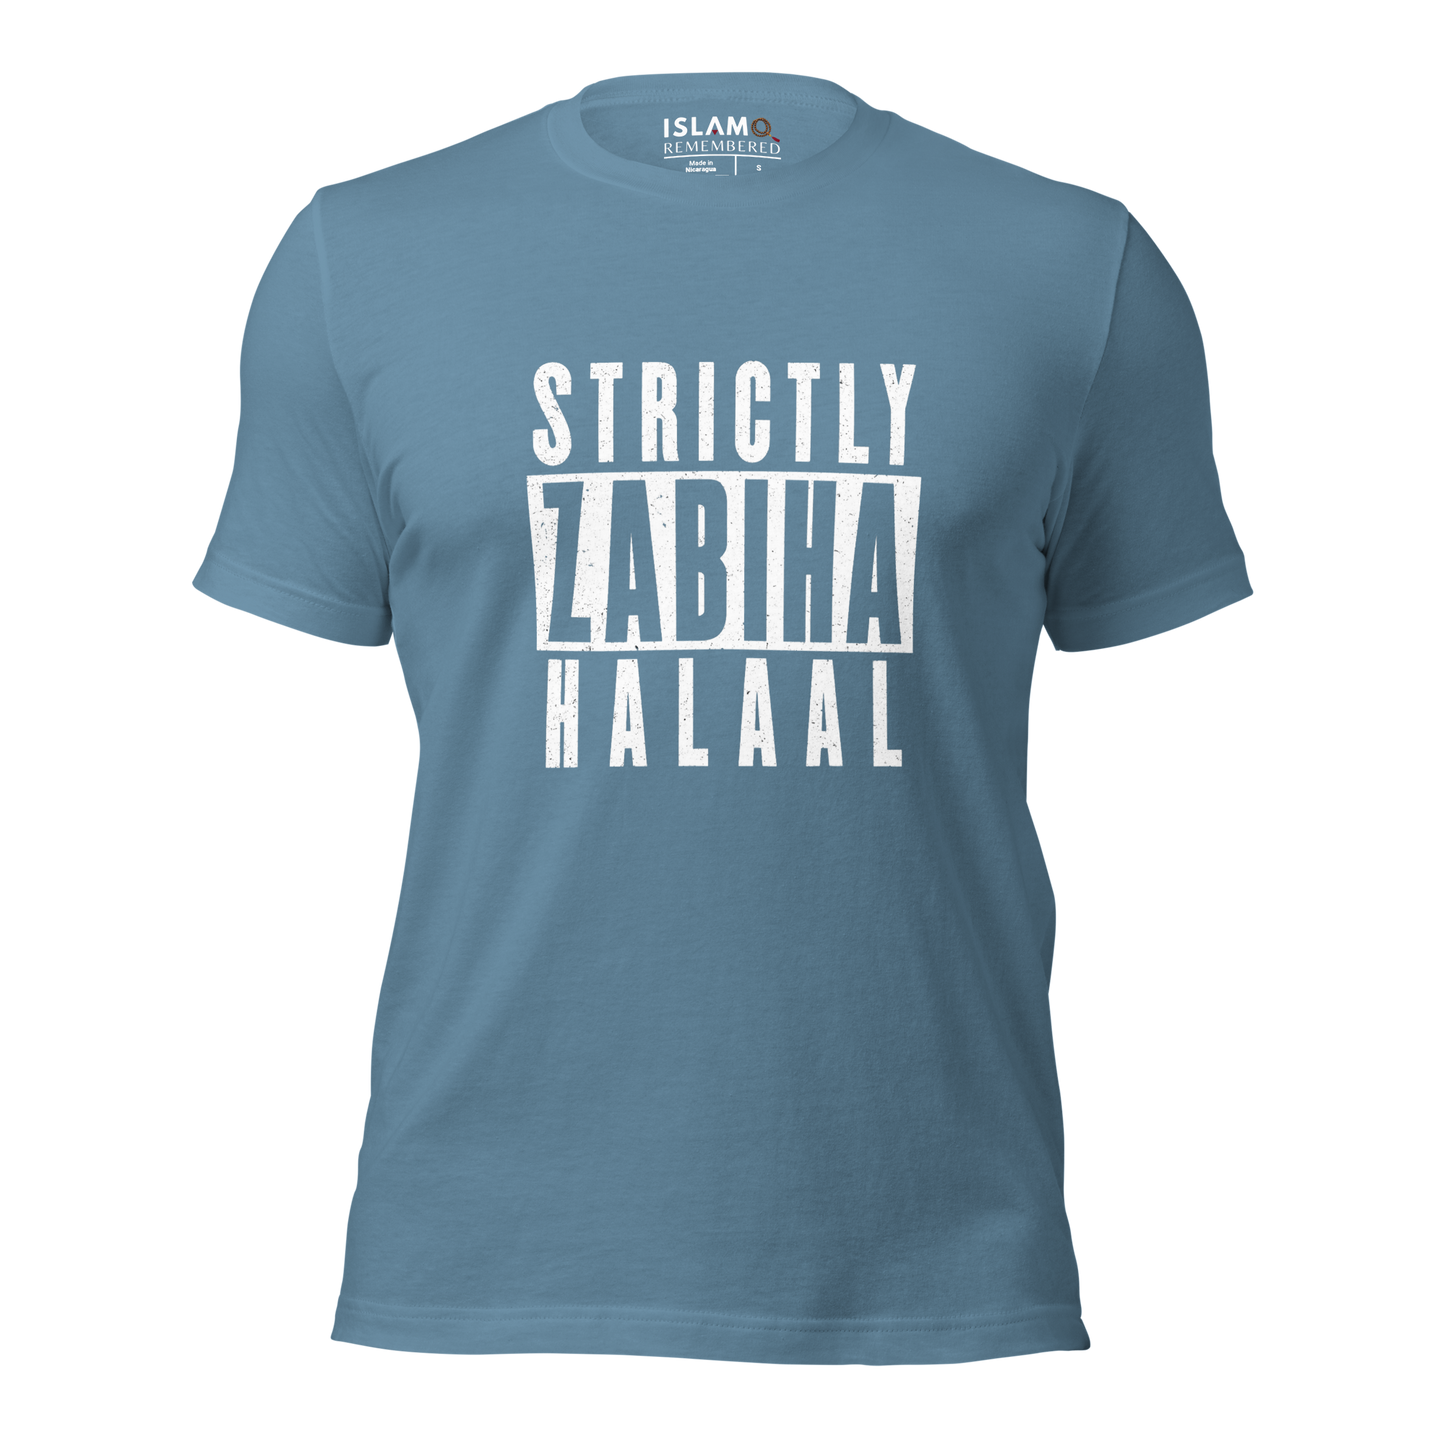 ADULT T-Shirt - STRICTLY ZABIHA HALAAL